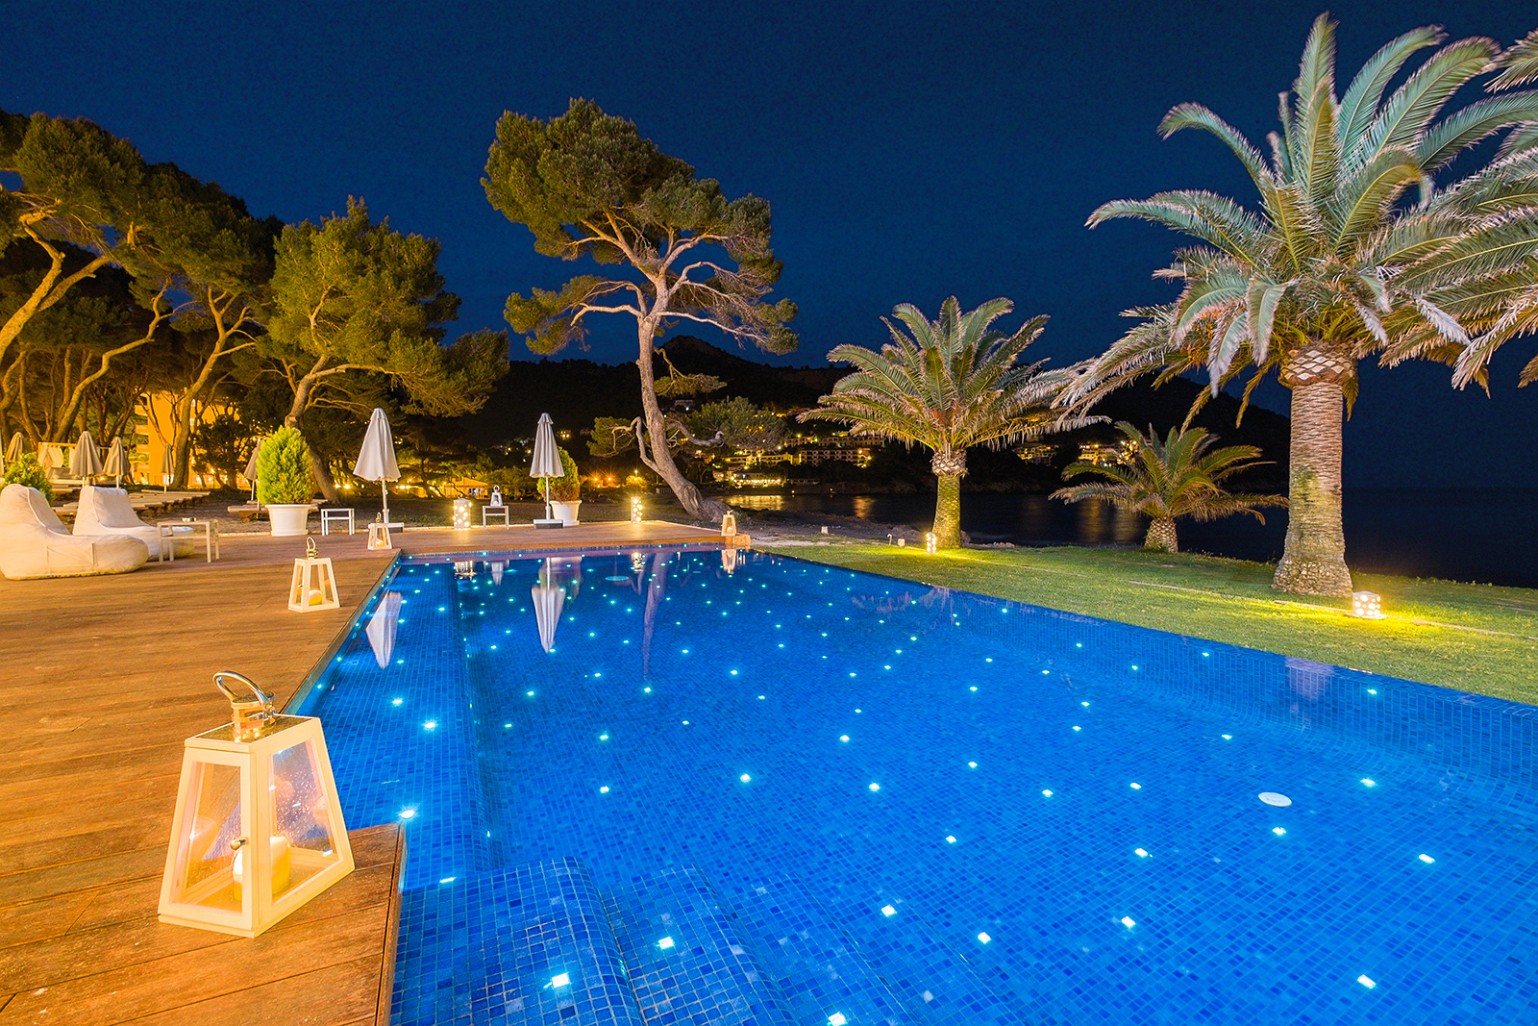 Canyamel_Hotel_Pool-Abend_0704_X-T1_5_10mm_1-2,5s_400-ISO_Mallorca-HDR_LR61_OCSj_web